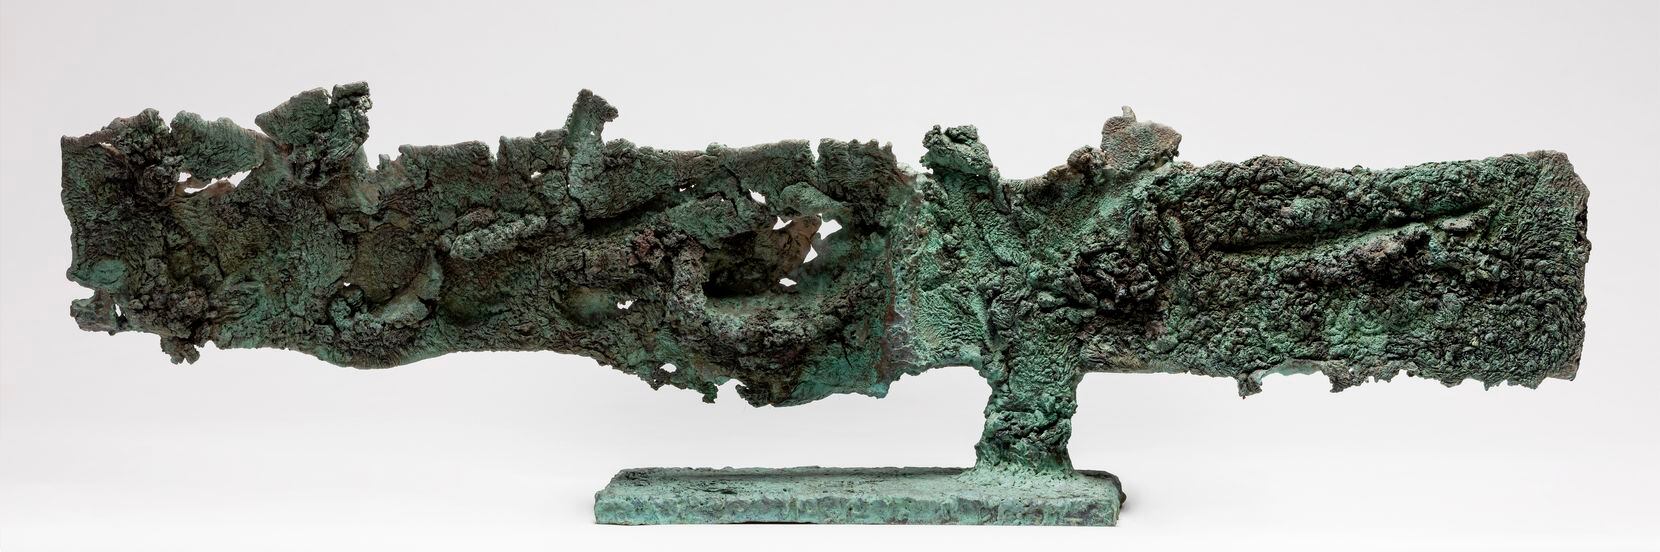 Harry Bertoia
Untitled (Spill cast), 1960s
Bronze
15 x 55 in. (38.1 x 139.7 cm)
Harry...